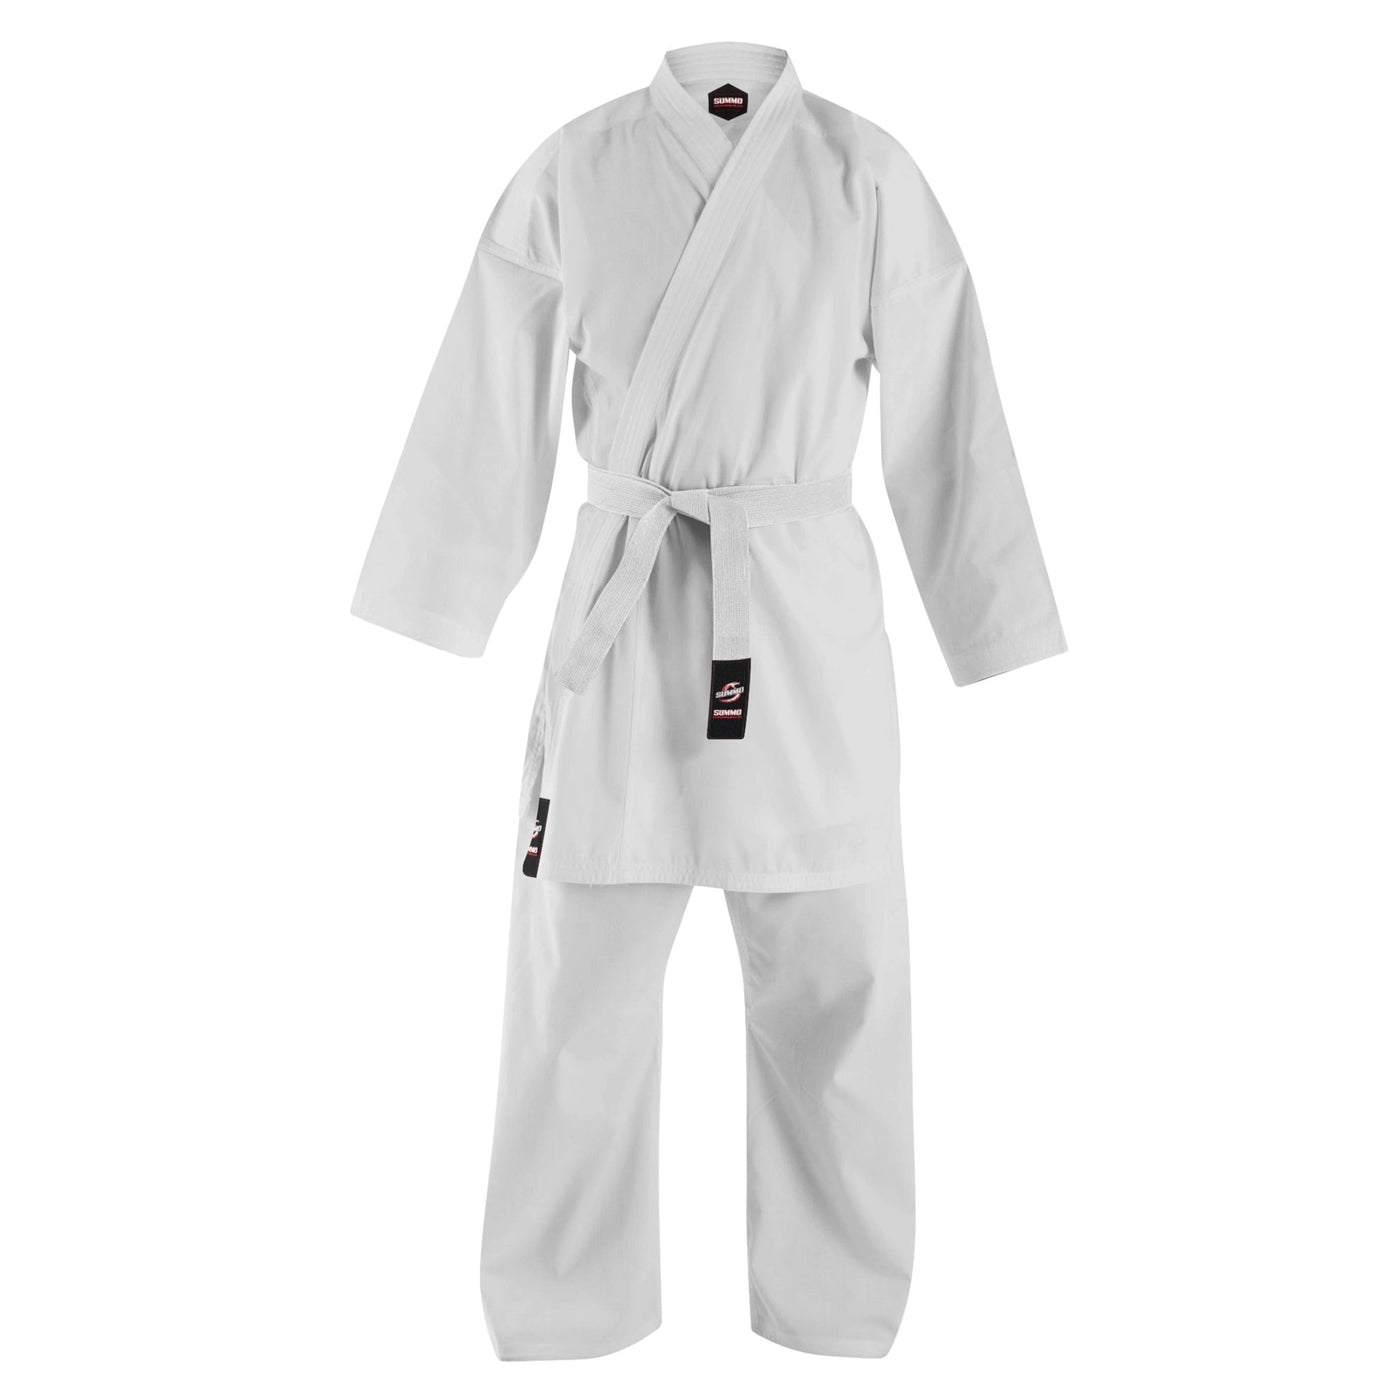 8 oz. Plain White Light Weight Karate Uniform - Summo Sports